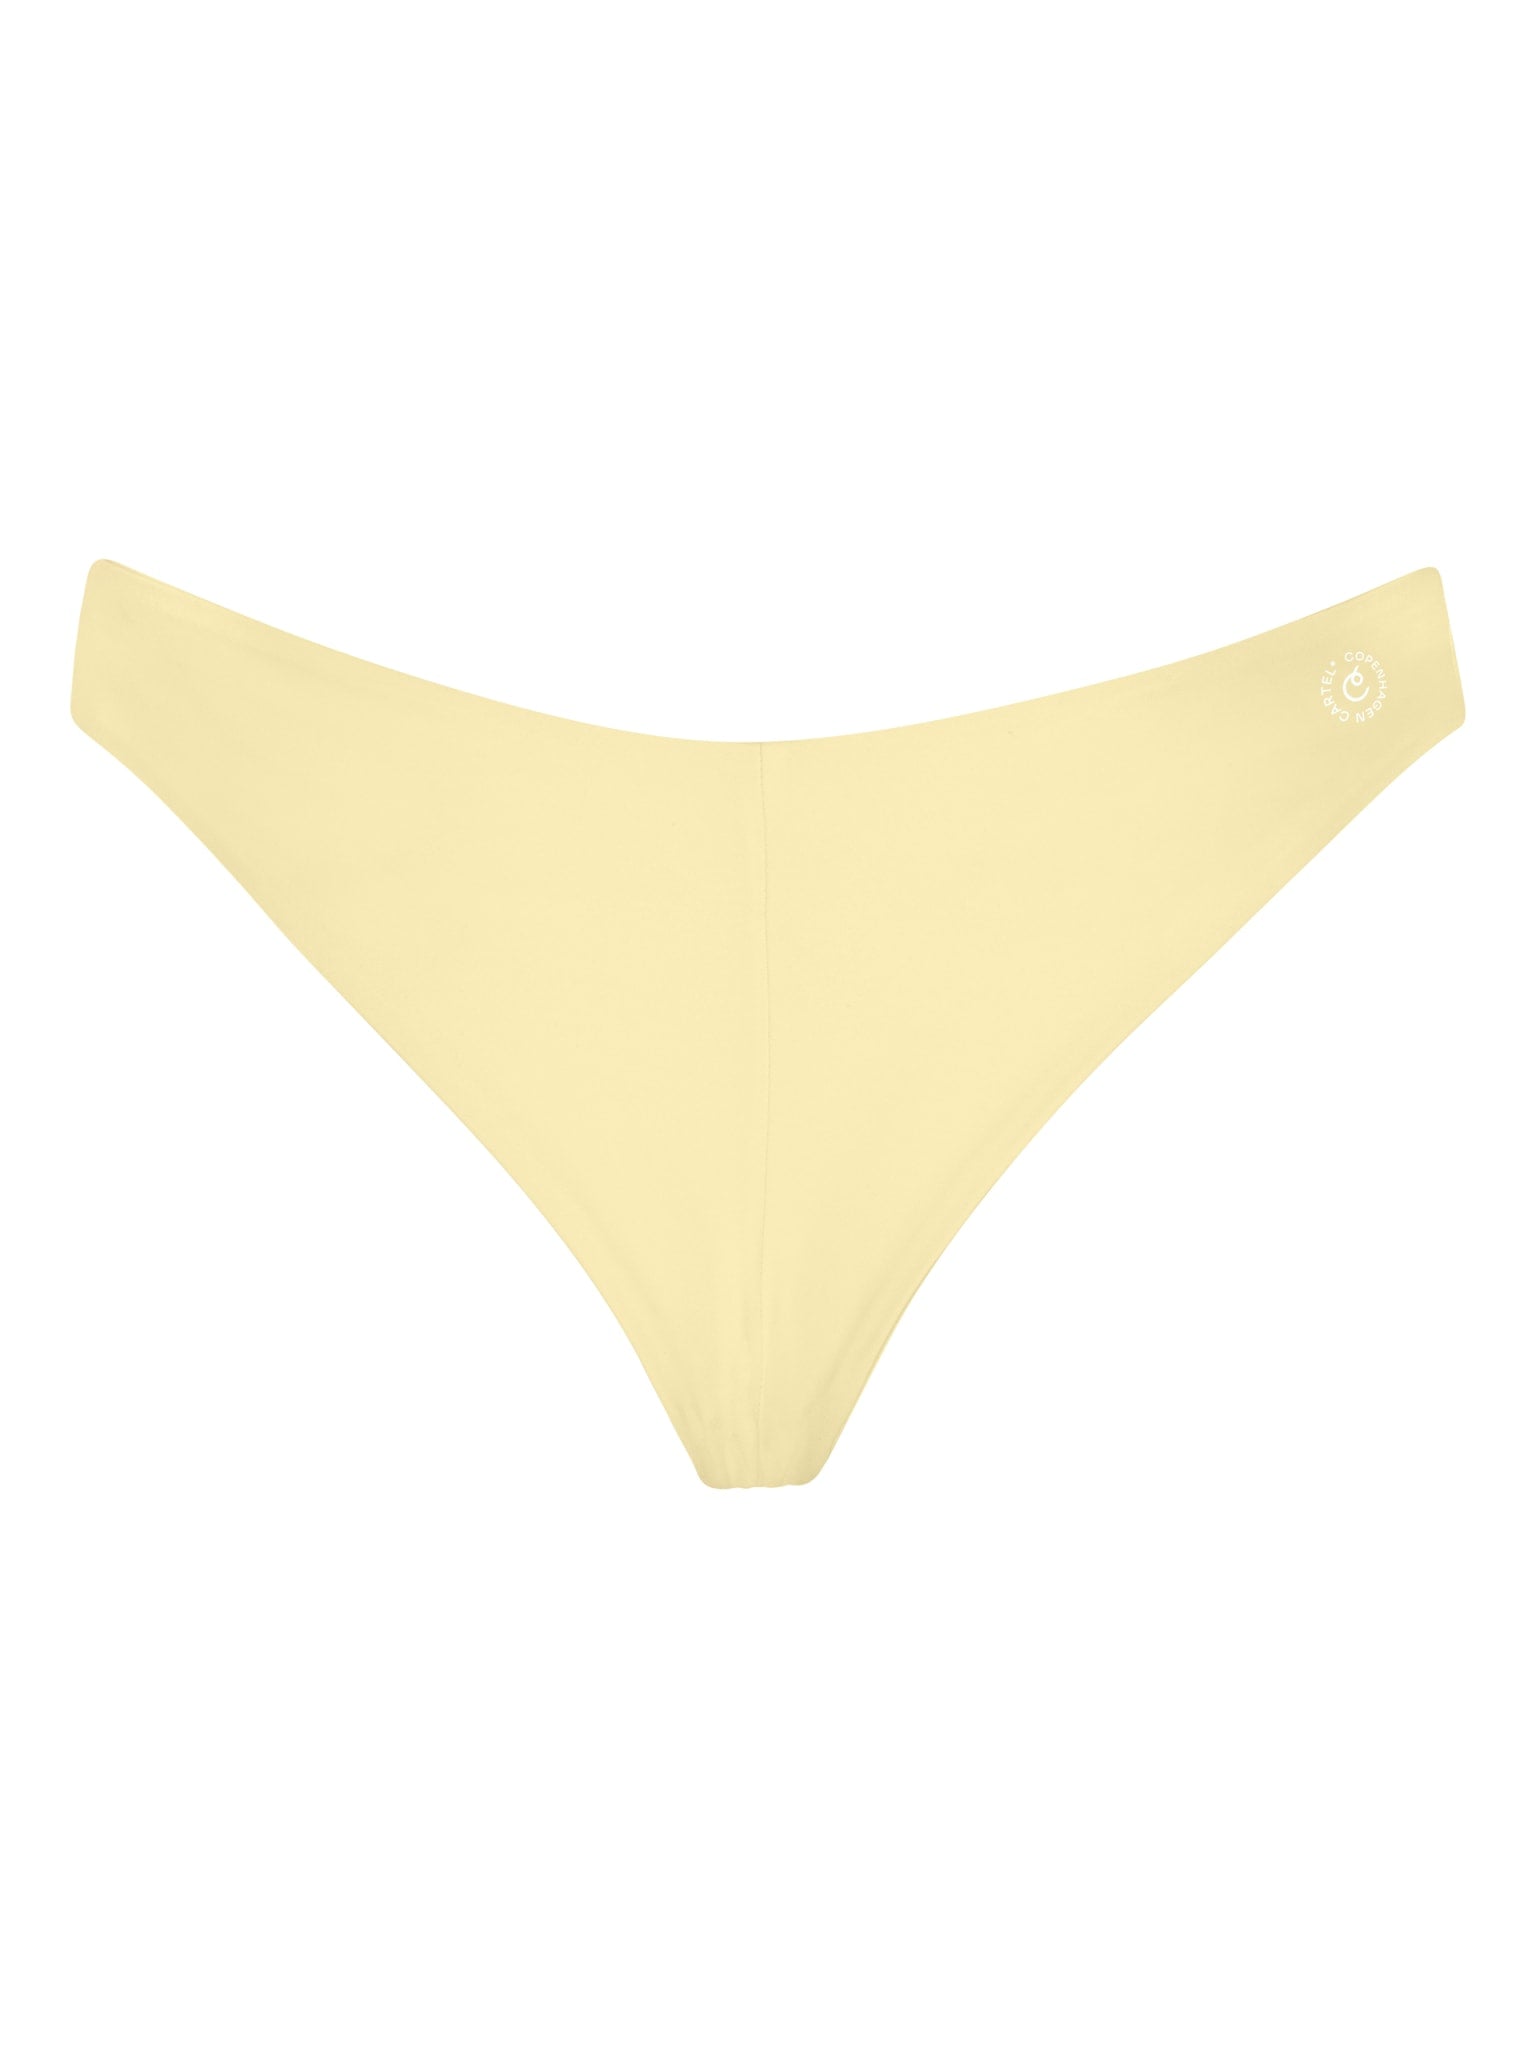 Canggu v-shape bikini bottom - Mellow